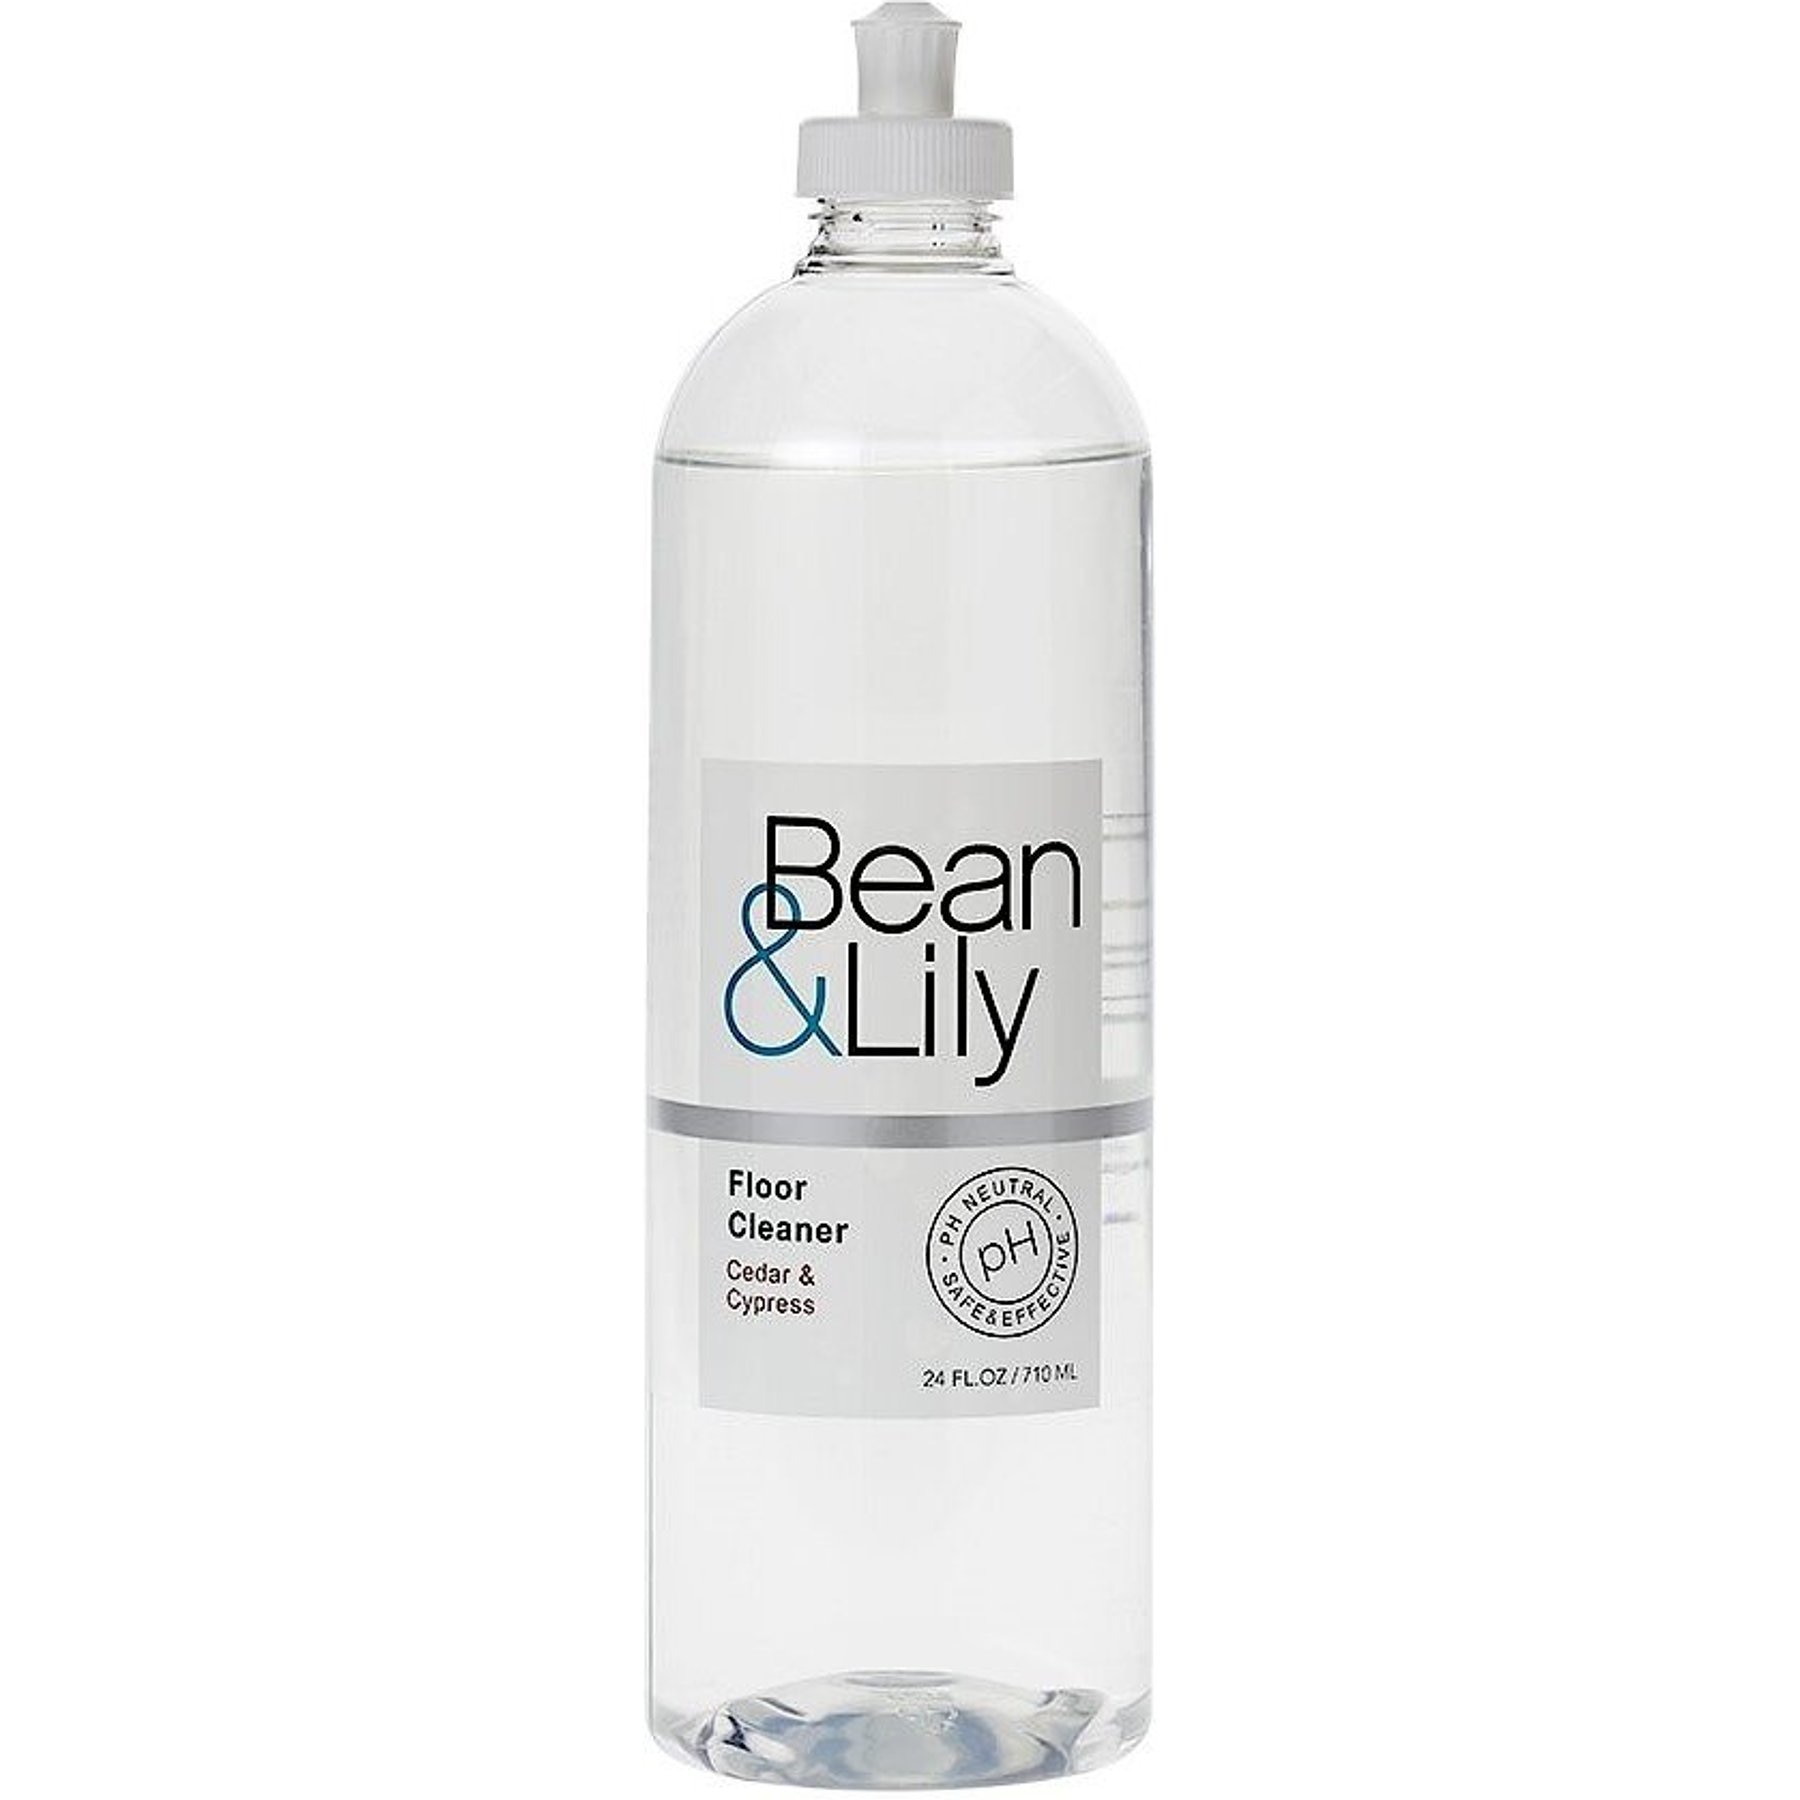  Bean & Lily Floor Cleaner - Cedar & Cypress - 24 oz